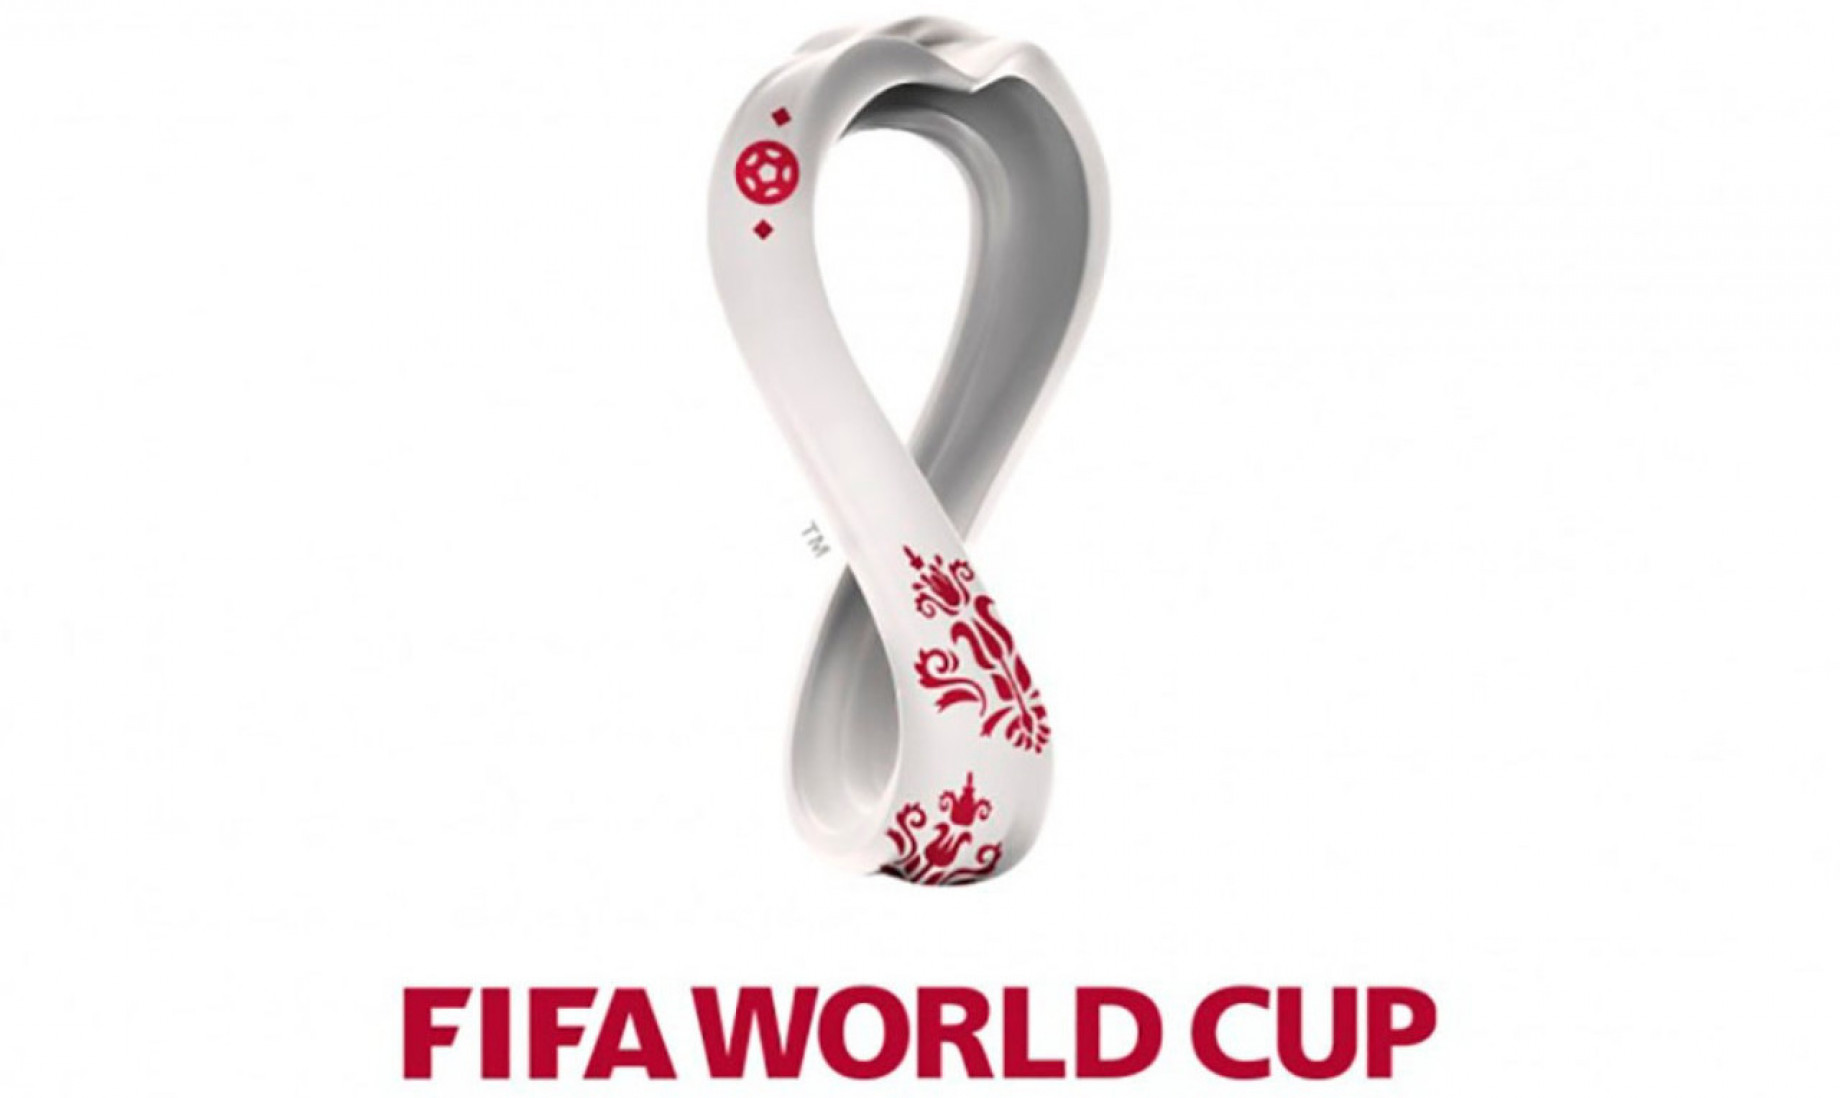 mondiale-qatar-2022-logo-gpo-wiki-commons.jpg